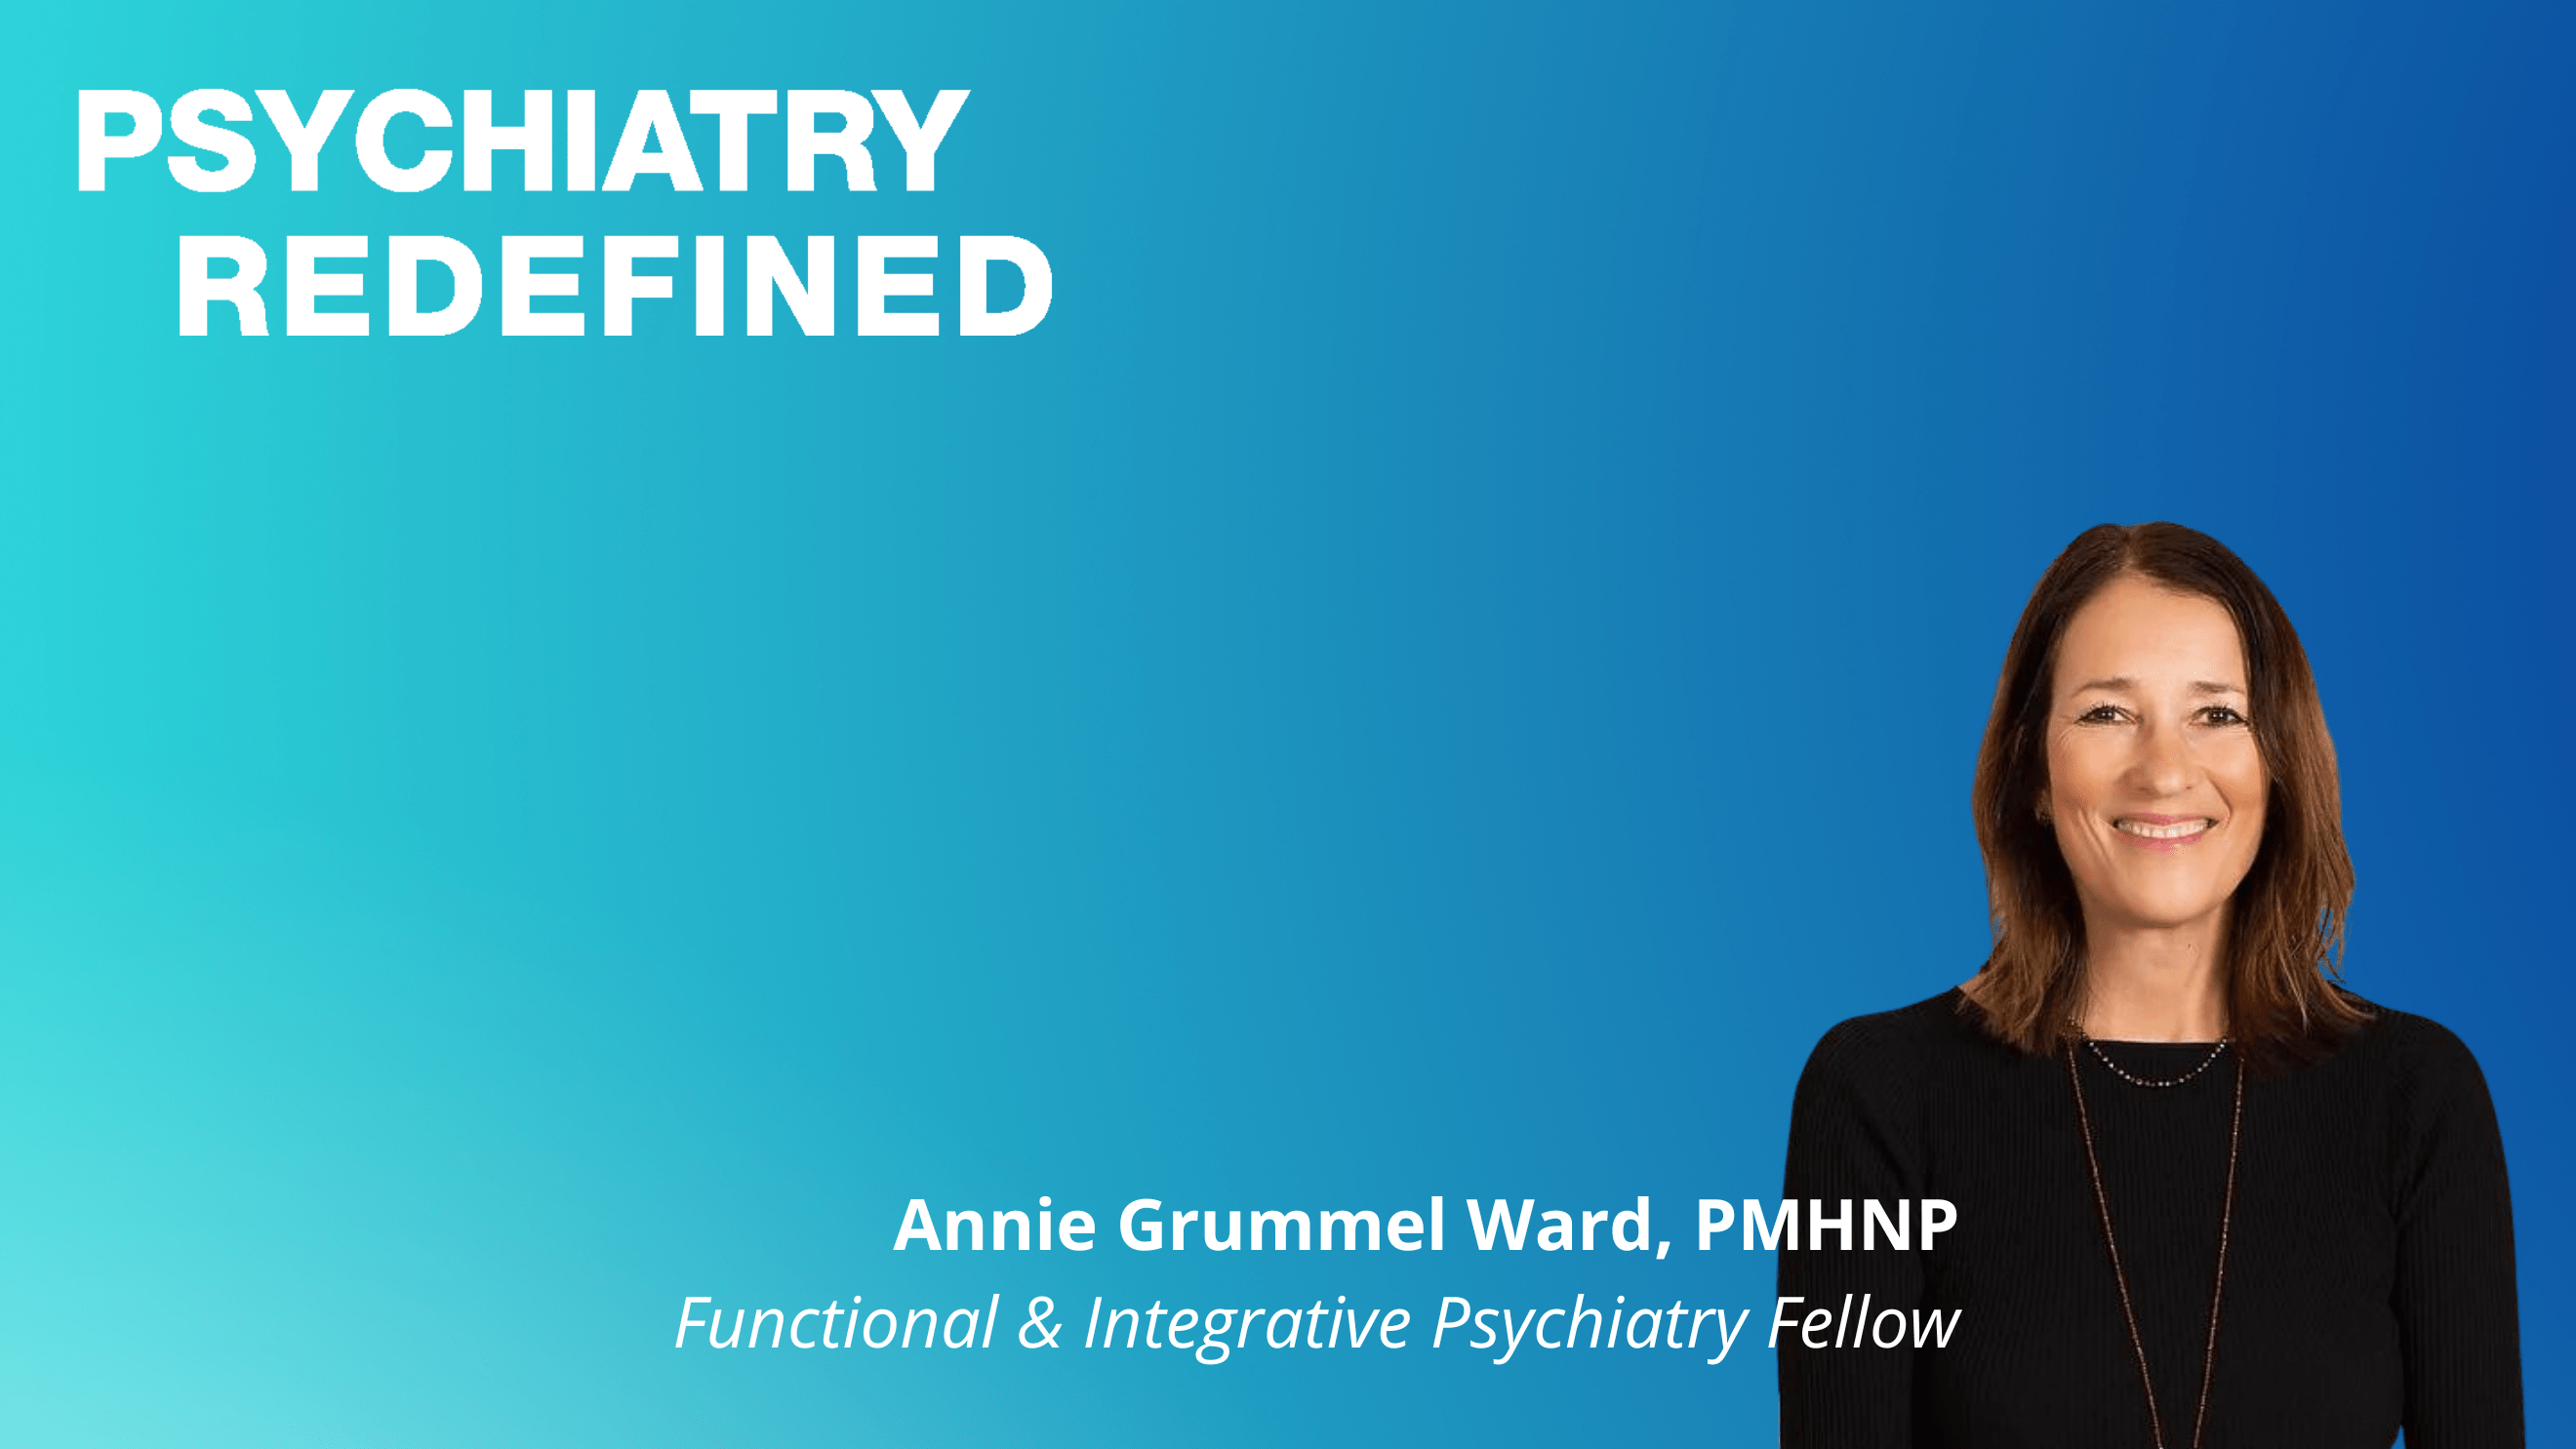 Annie Grummel Ward, PMHNP, Psychiatry Redefined Fellow